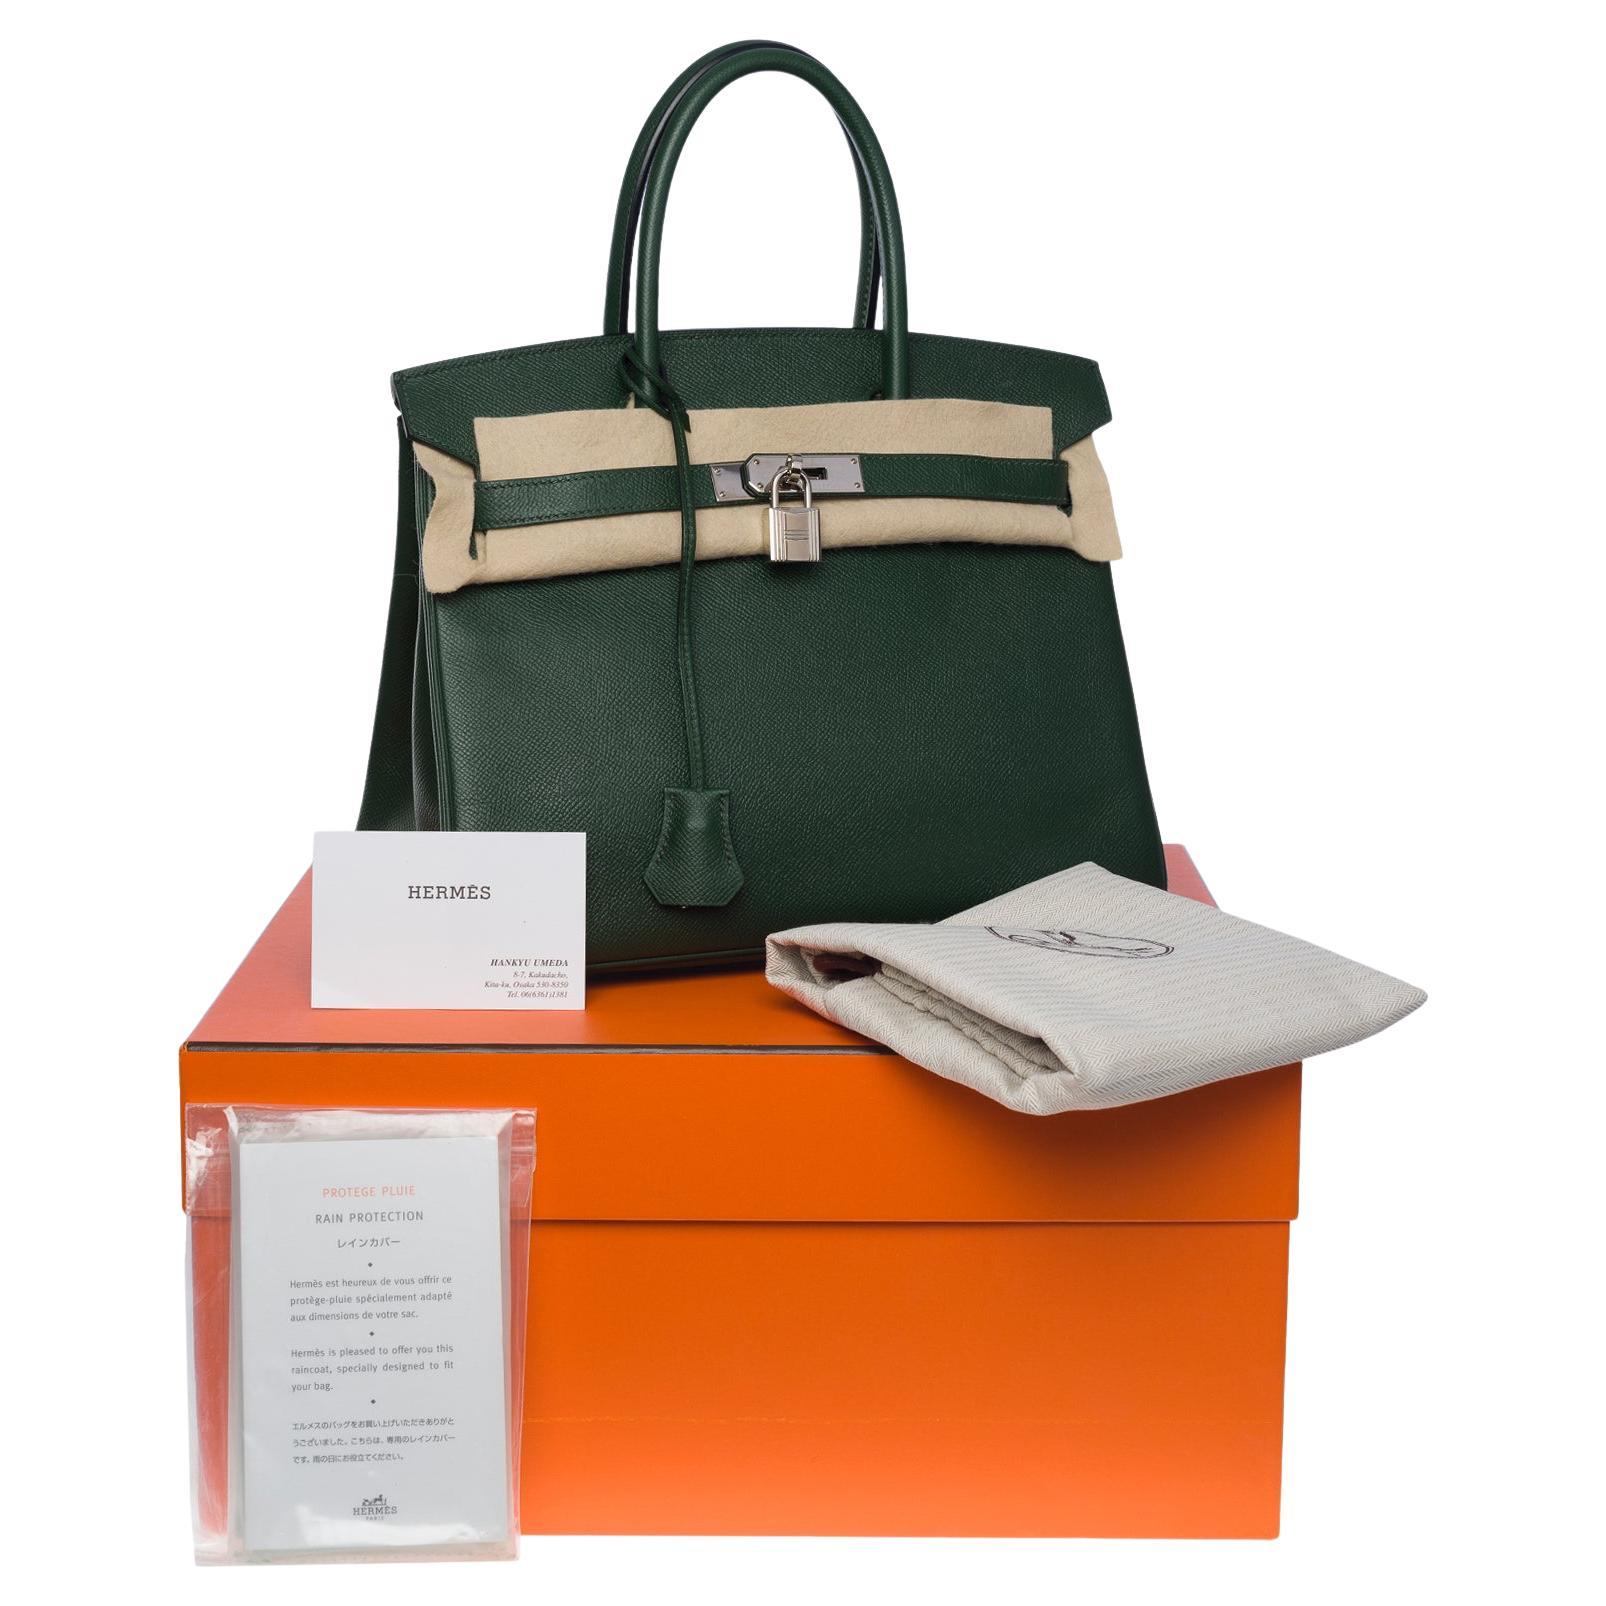 Amazing & Rare Hermès Birkin 30 handbag in Vert Anglais Epsom leather, SHW For Sale